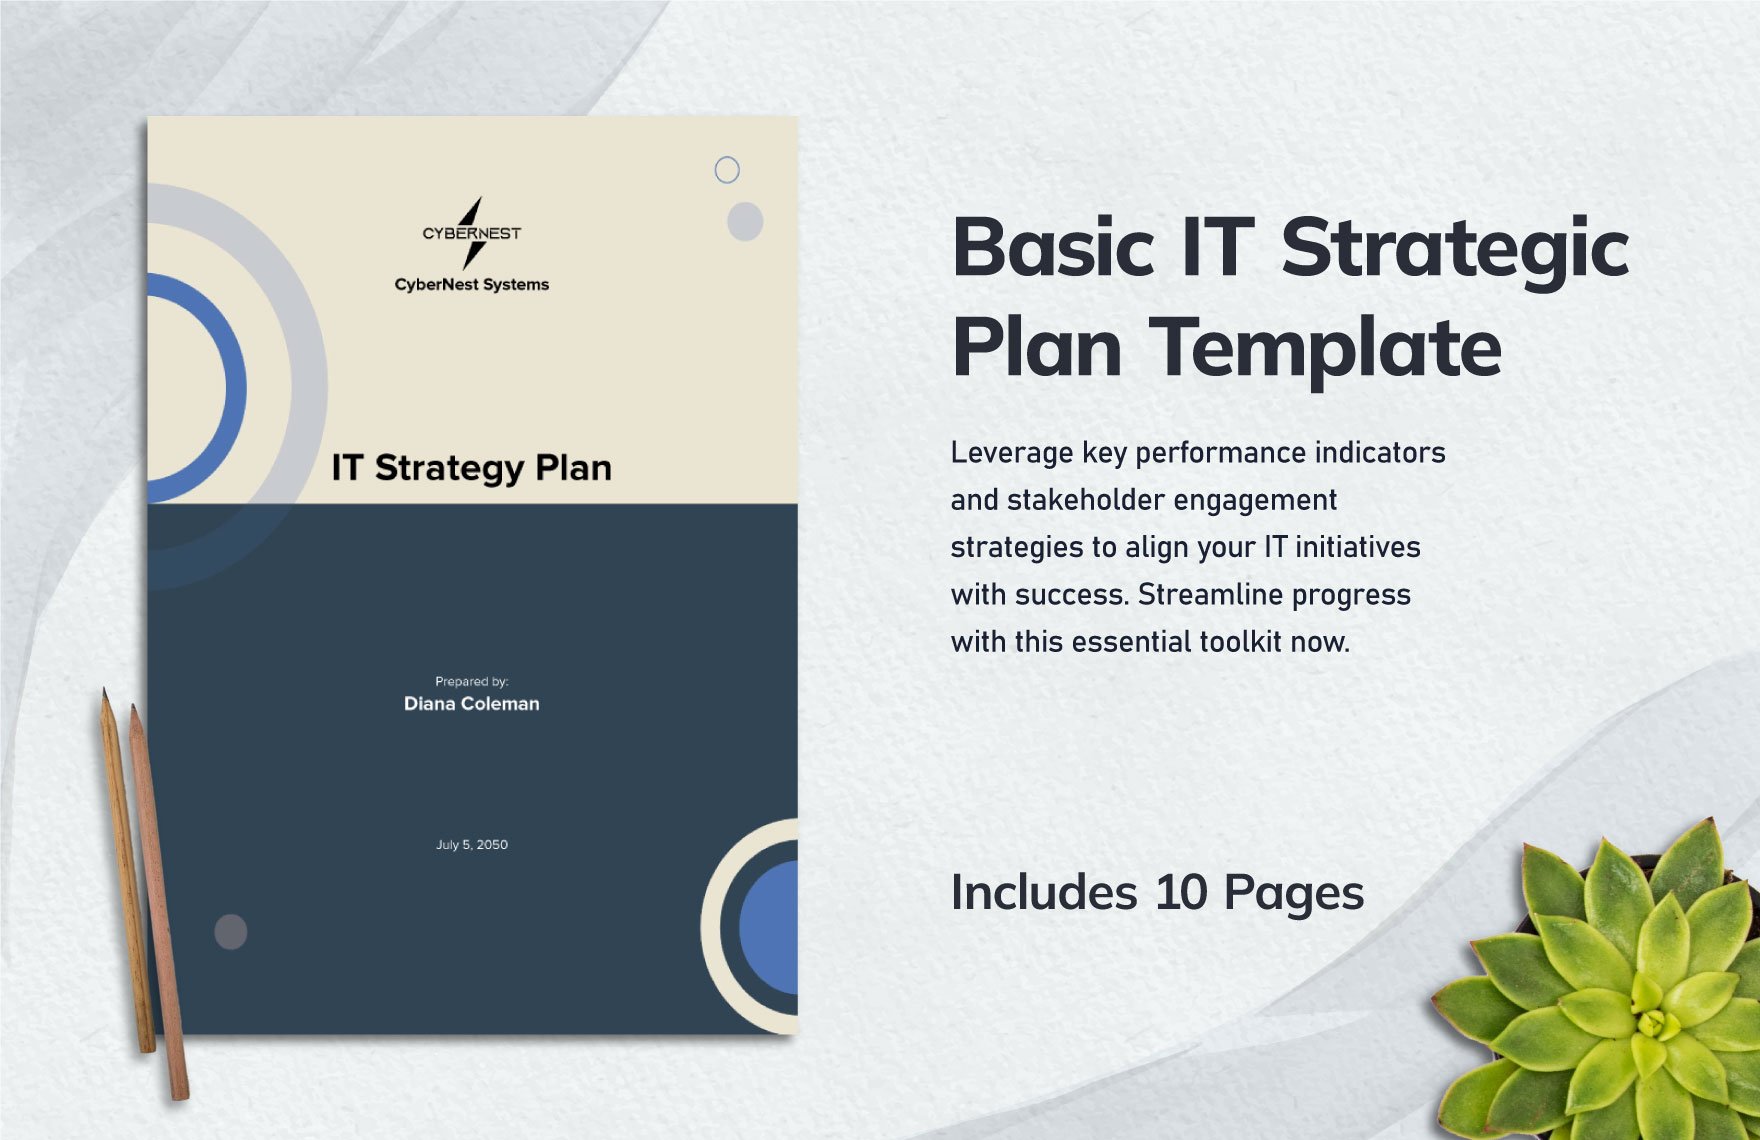 Basic IT Strategic Plan Template